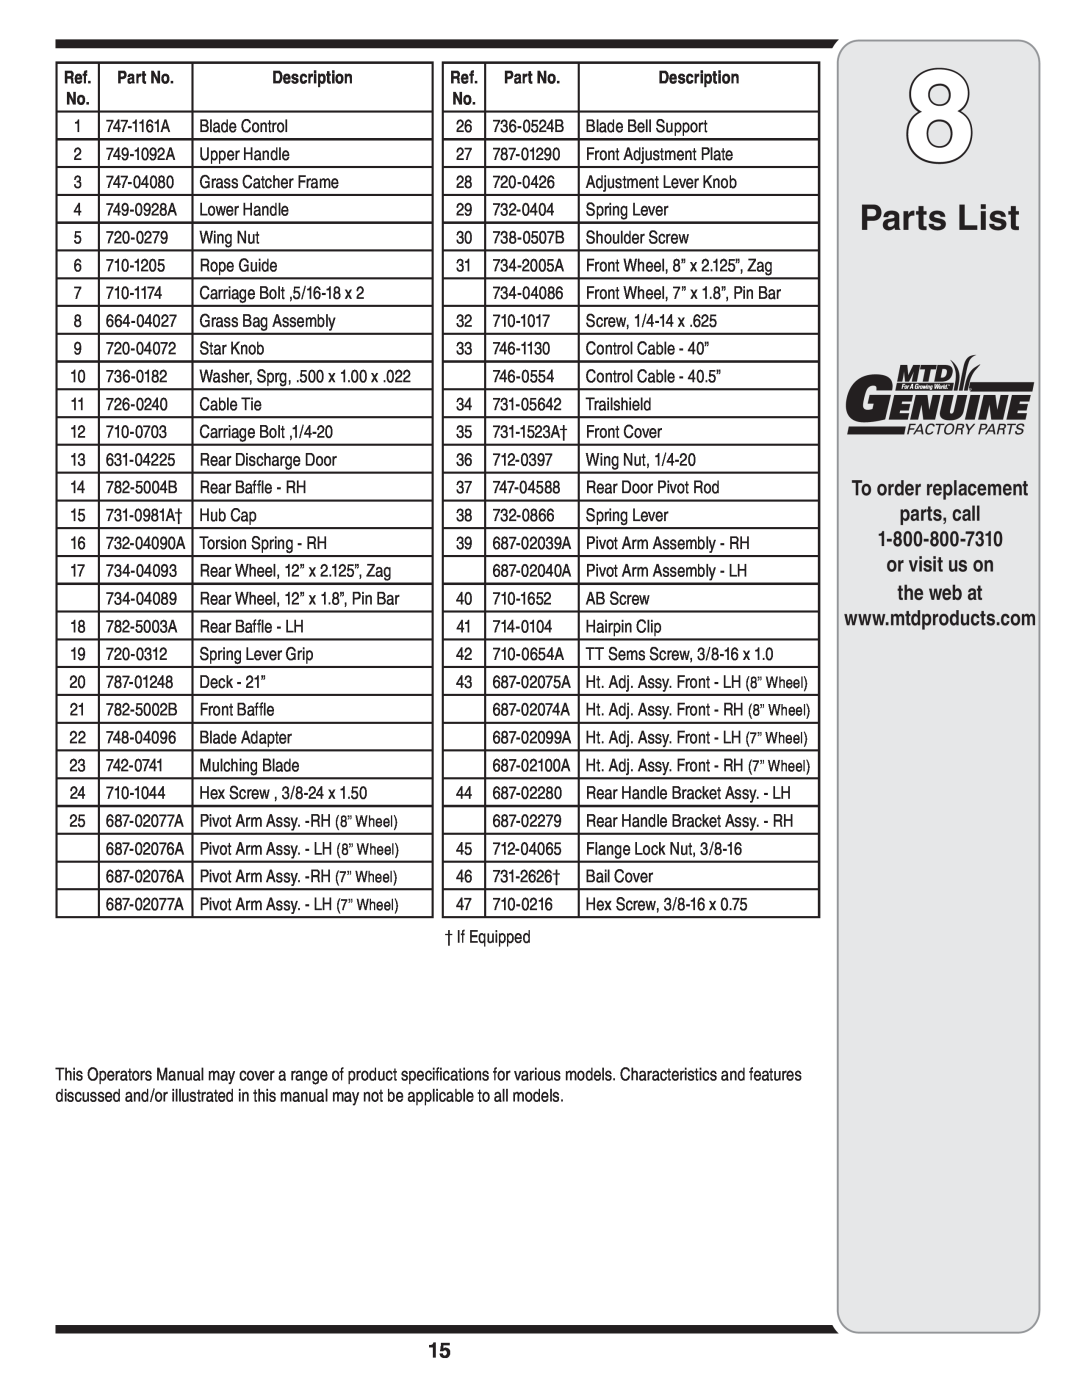 MTD Series 580 warranty Parts List, Description 